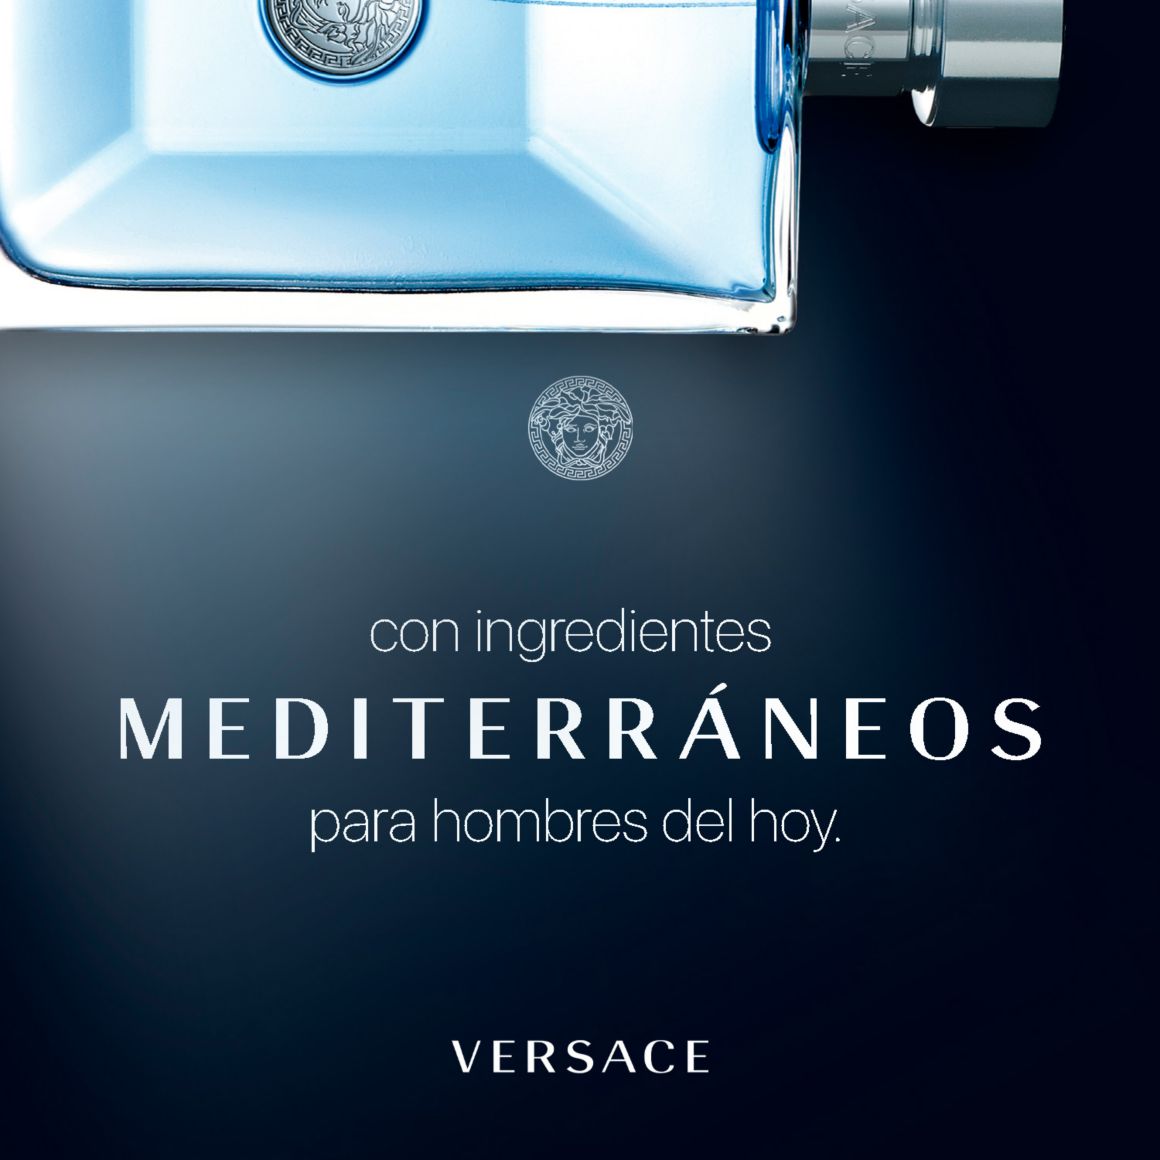 VERSACE, Versace, Fragancia Versace, Perfume, Fragancia, Aroma, Estela, Por Homme, Mediterraneo, Ingredientes, Fragancia Azul, Azul, Cristalino